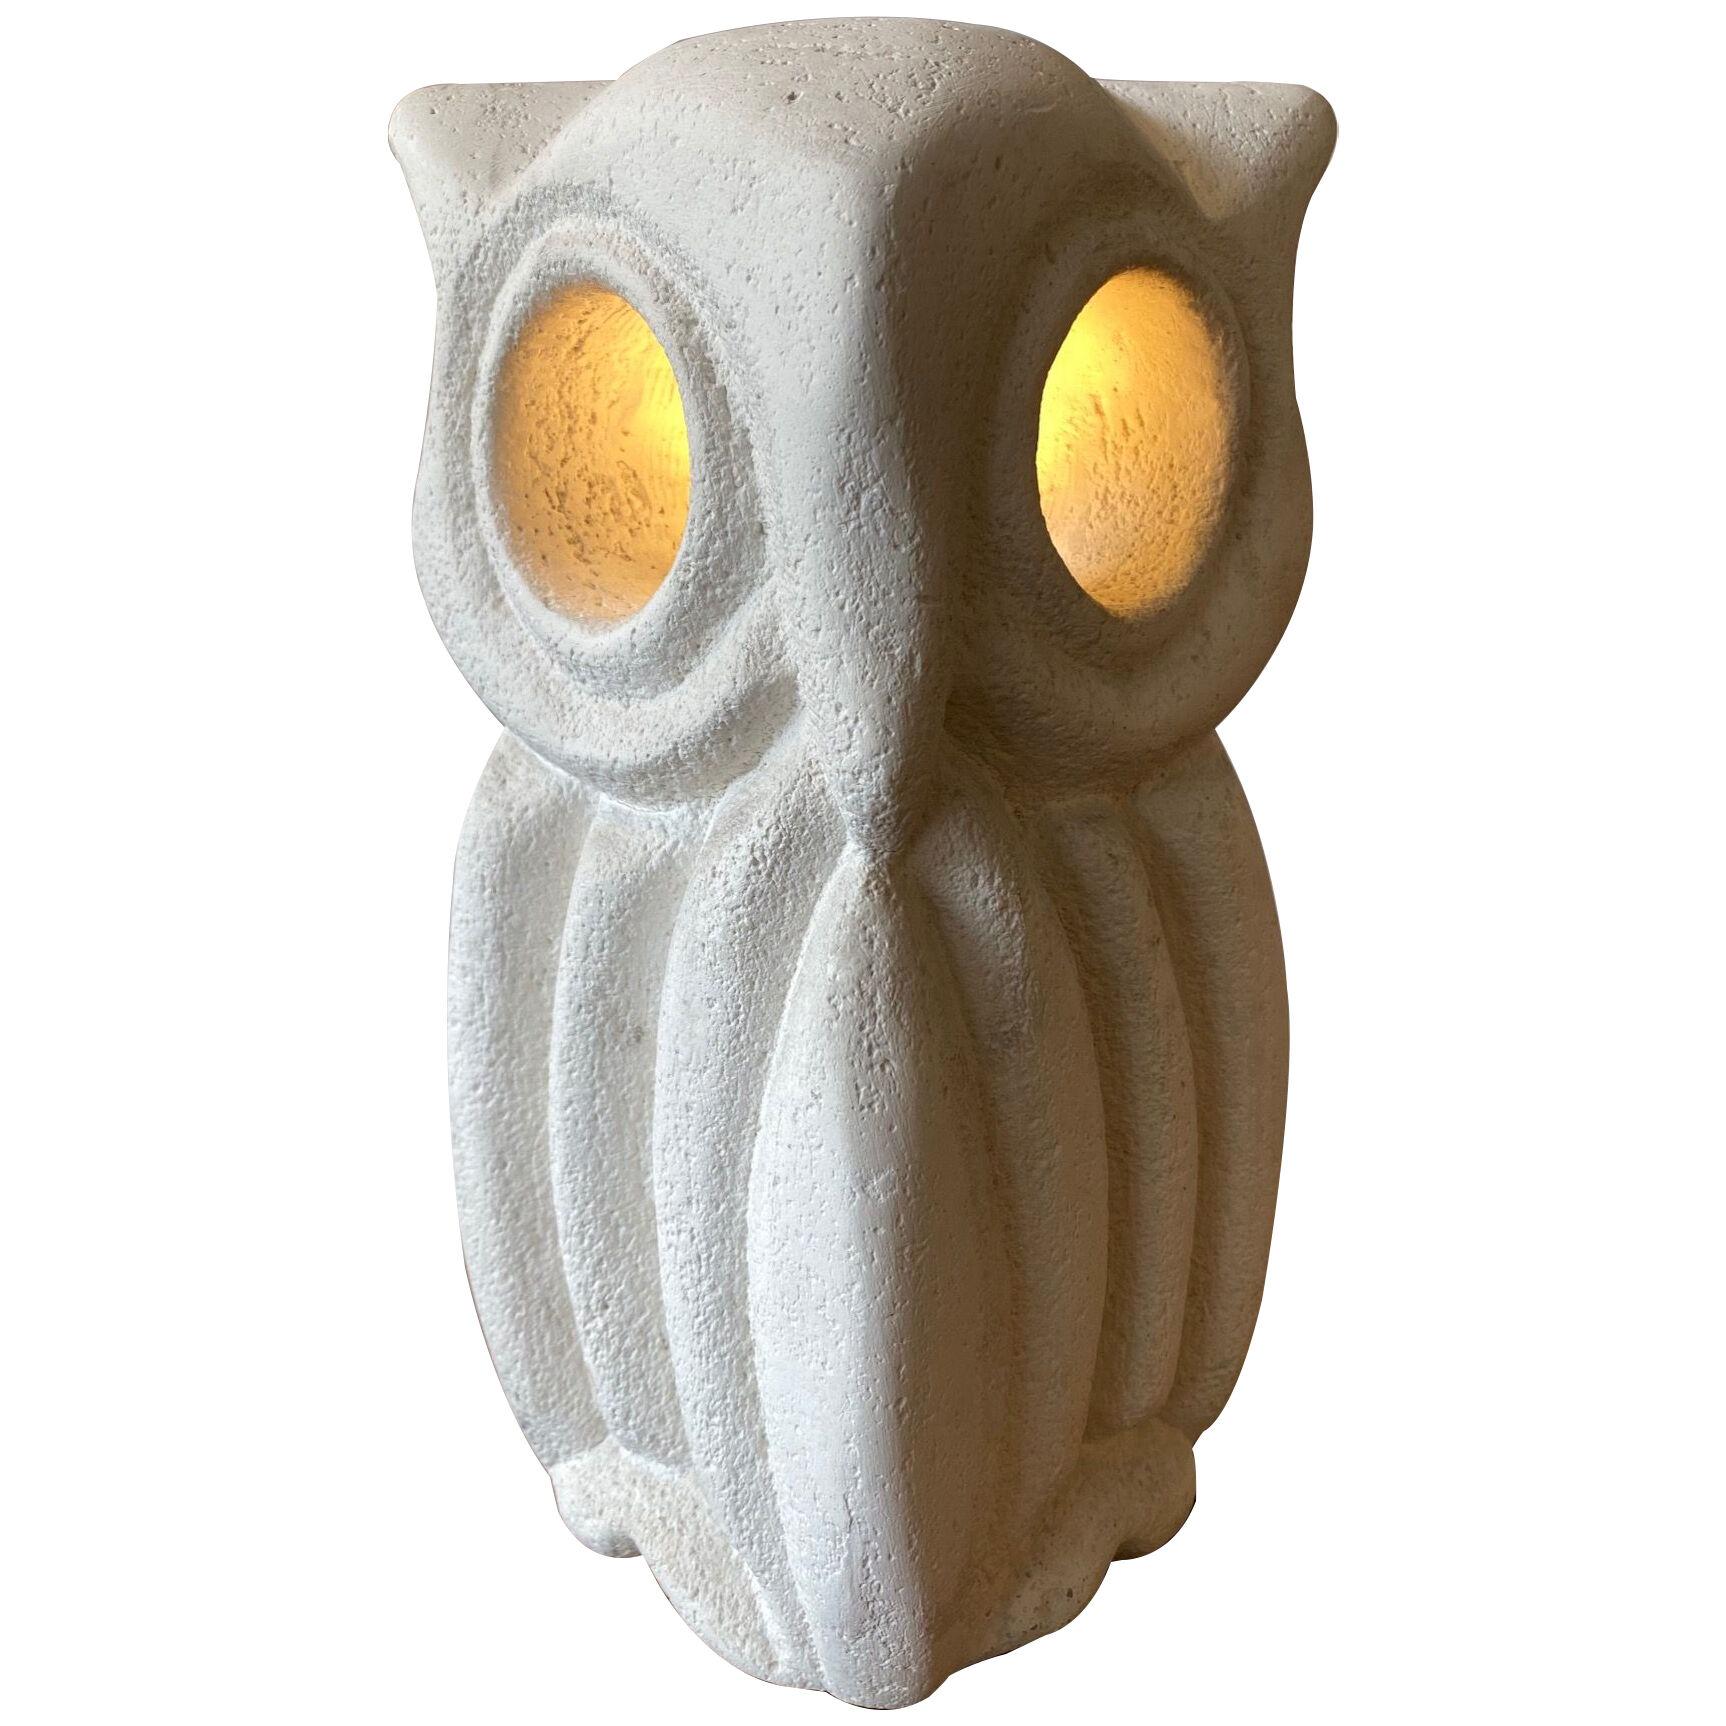 Limestone Table Lamp "Owl" by Albert Tormos, France, 1970s